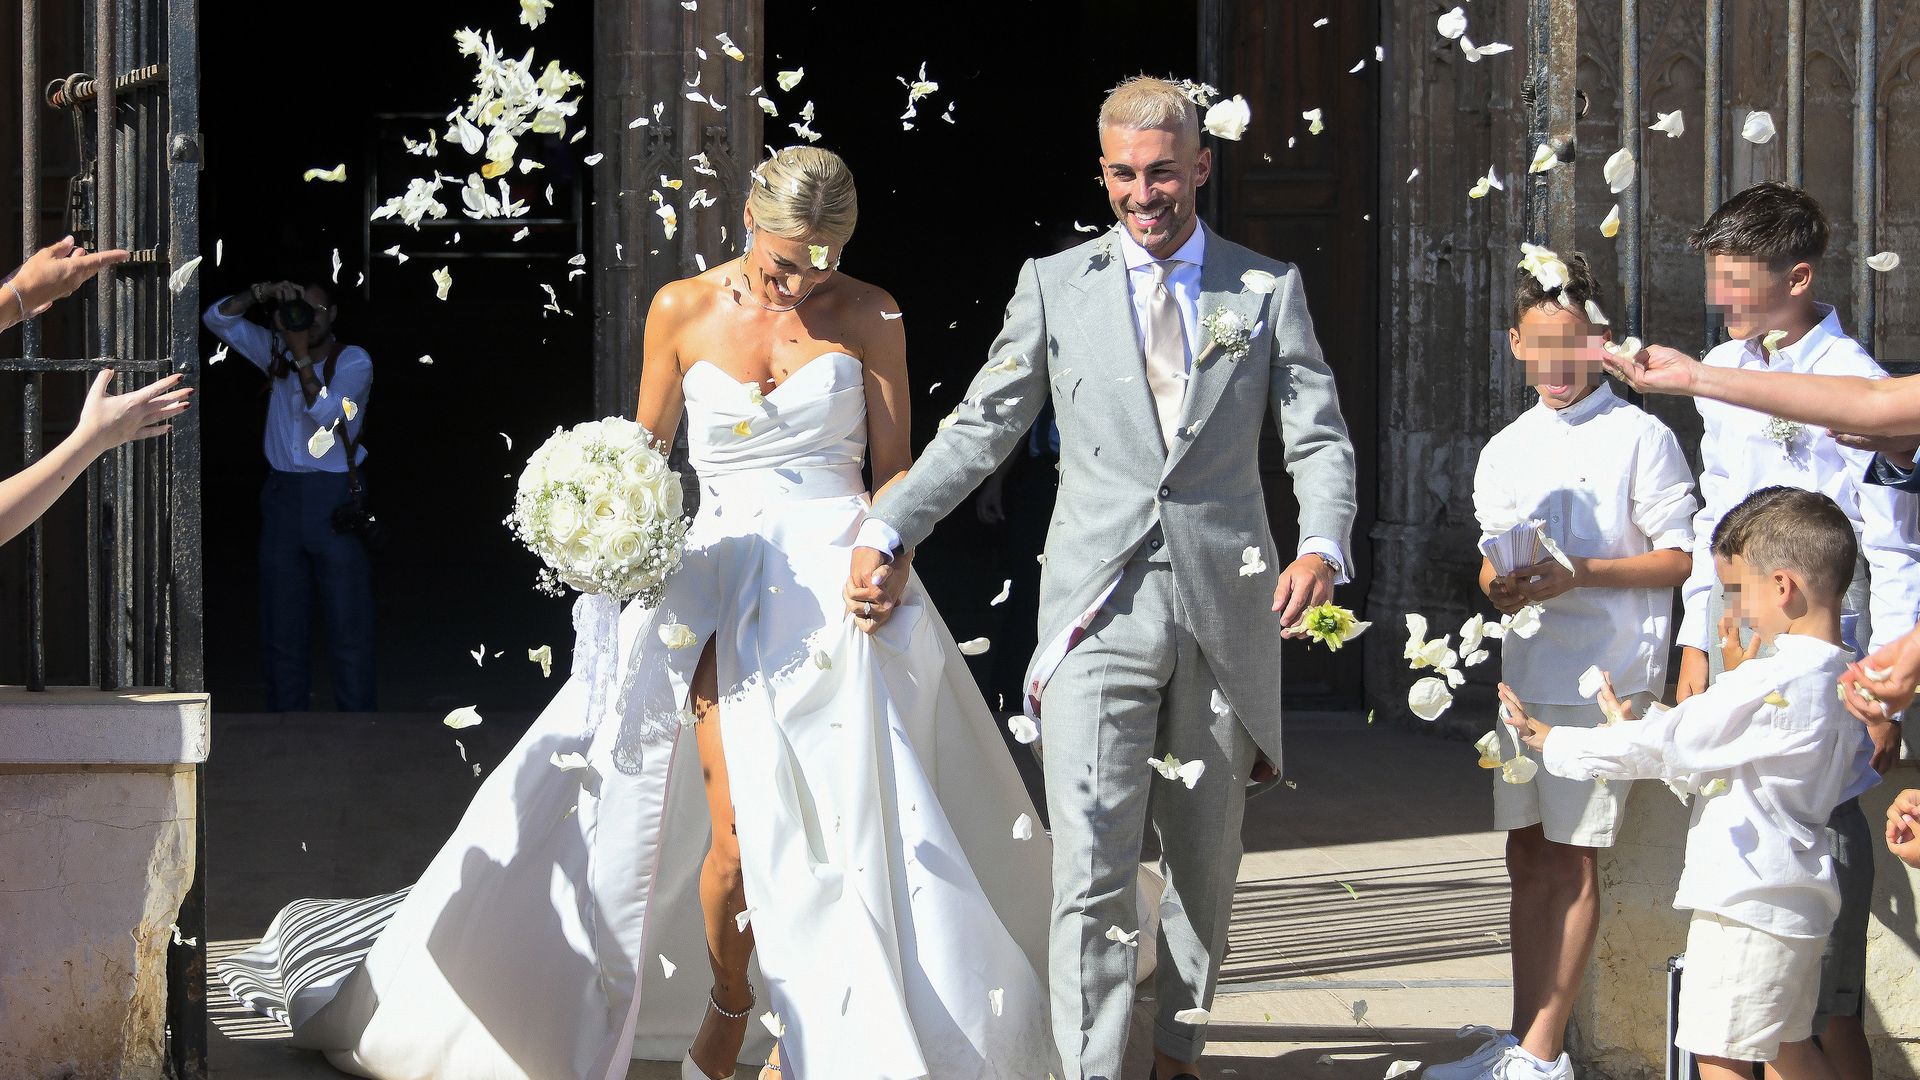 La espectacular boda del futbolista Dani Rodríguez y la modelo Cristina Palavra en la Catedral de Mallorca